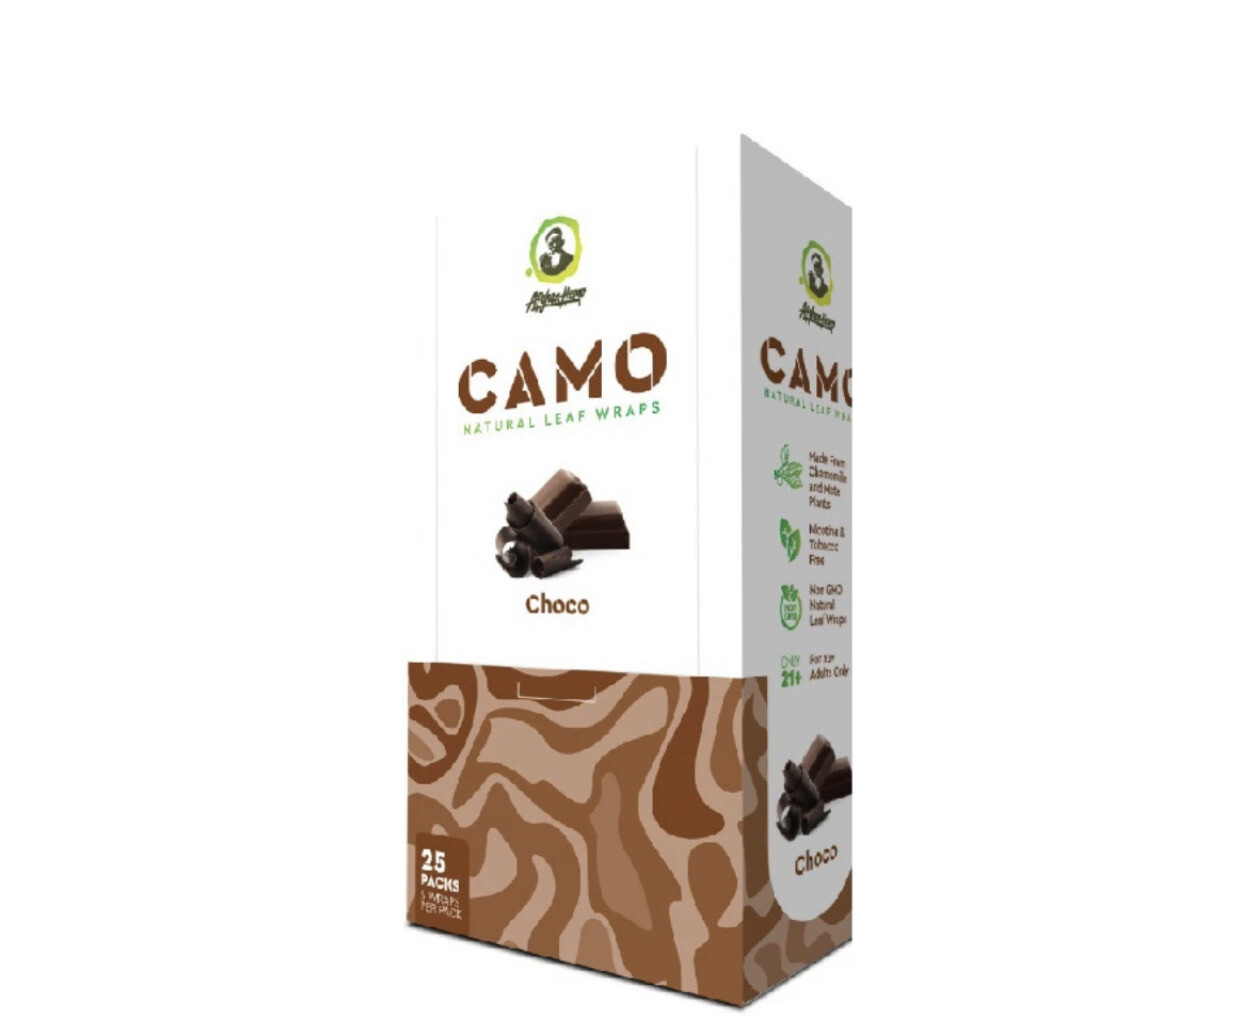 CAMO NATURAL LEAF WRAPS - CHOCOLATE